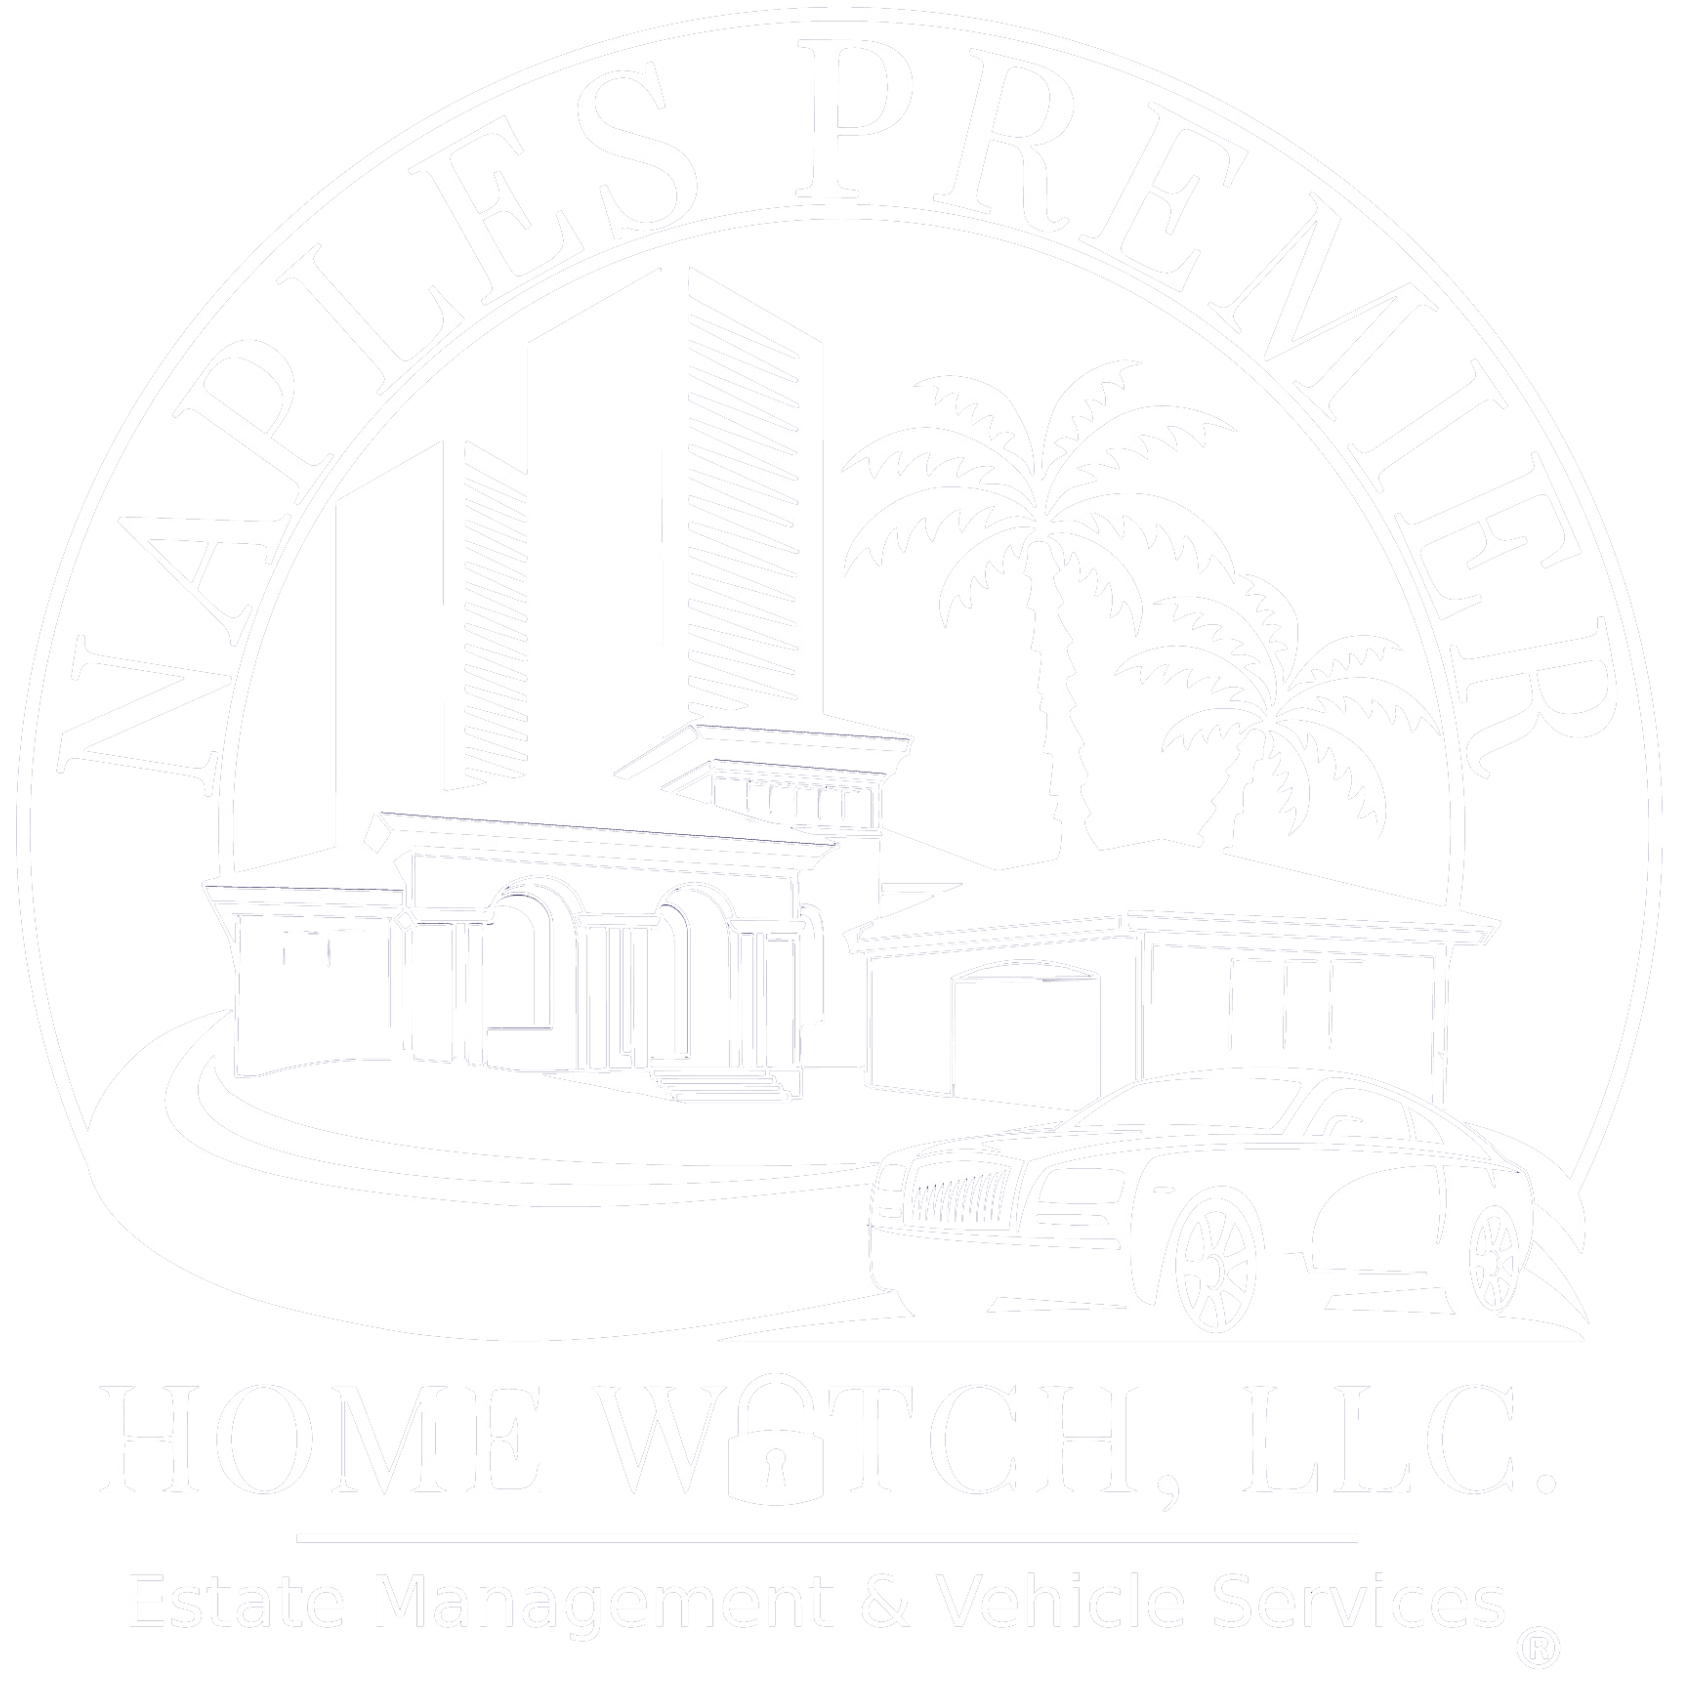 Naples Premier Home Watch, LLC